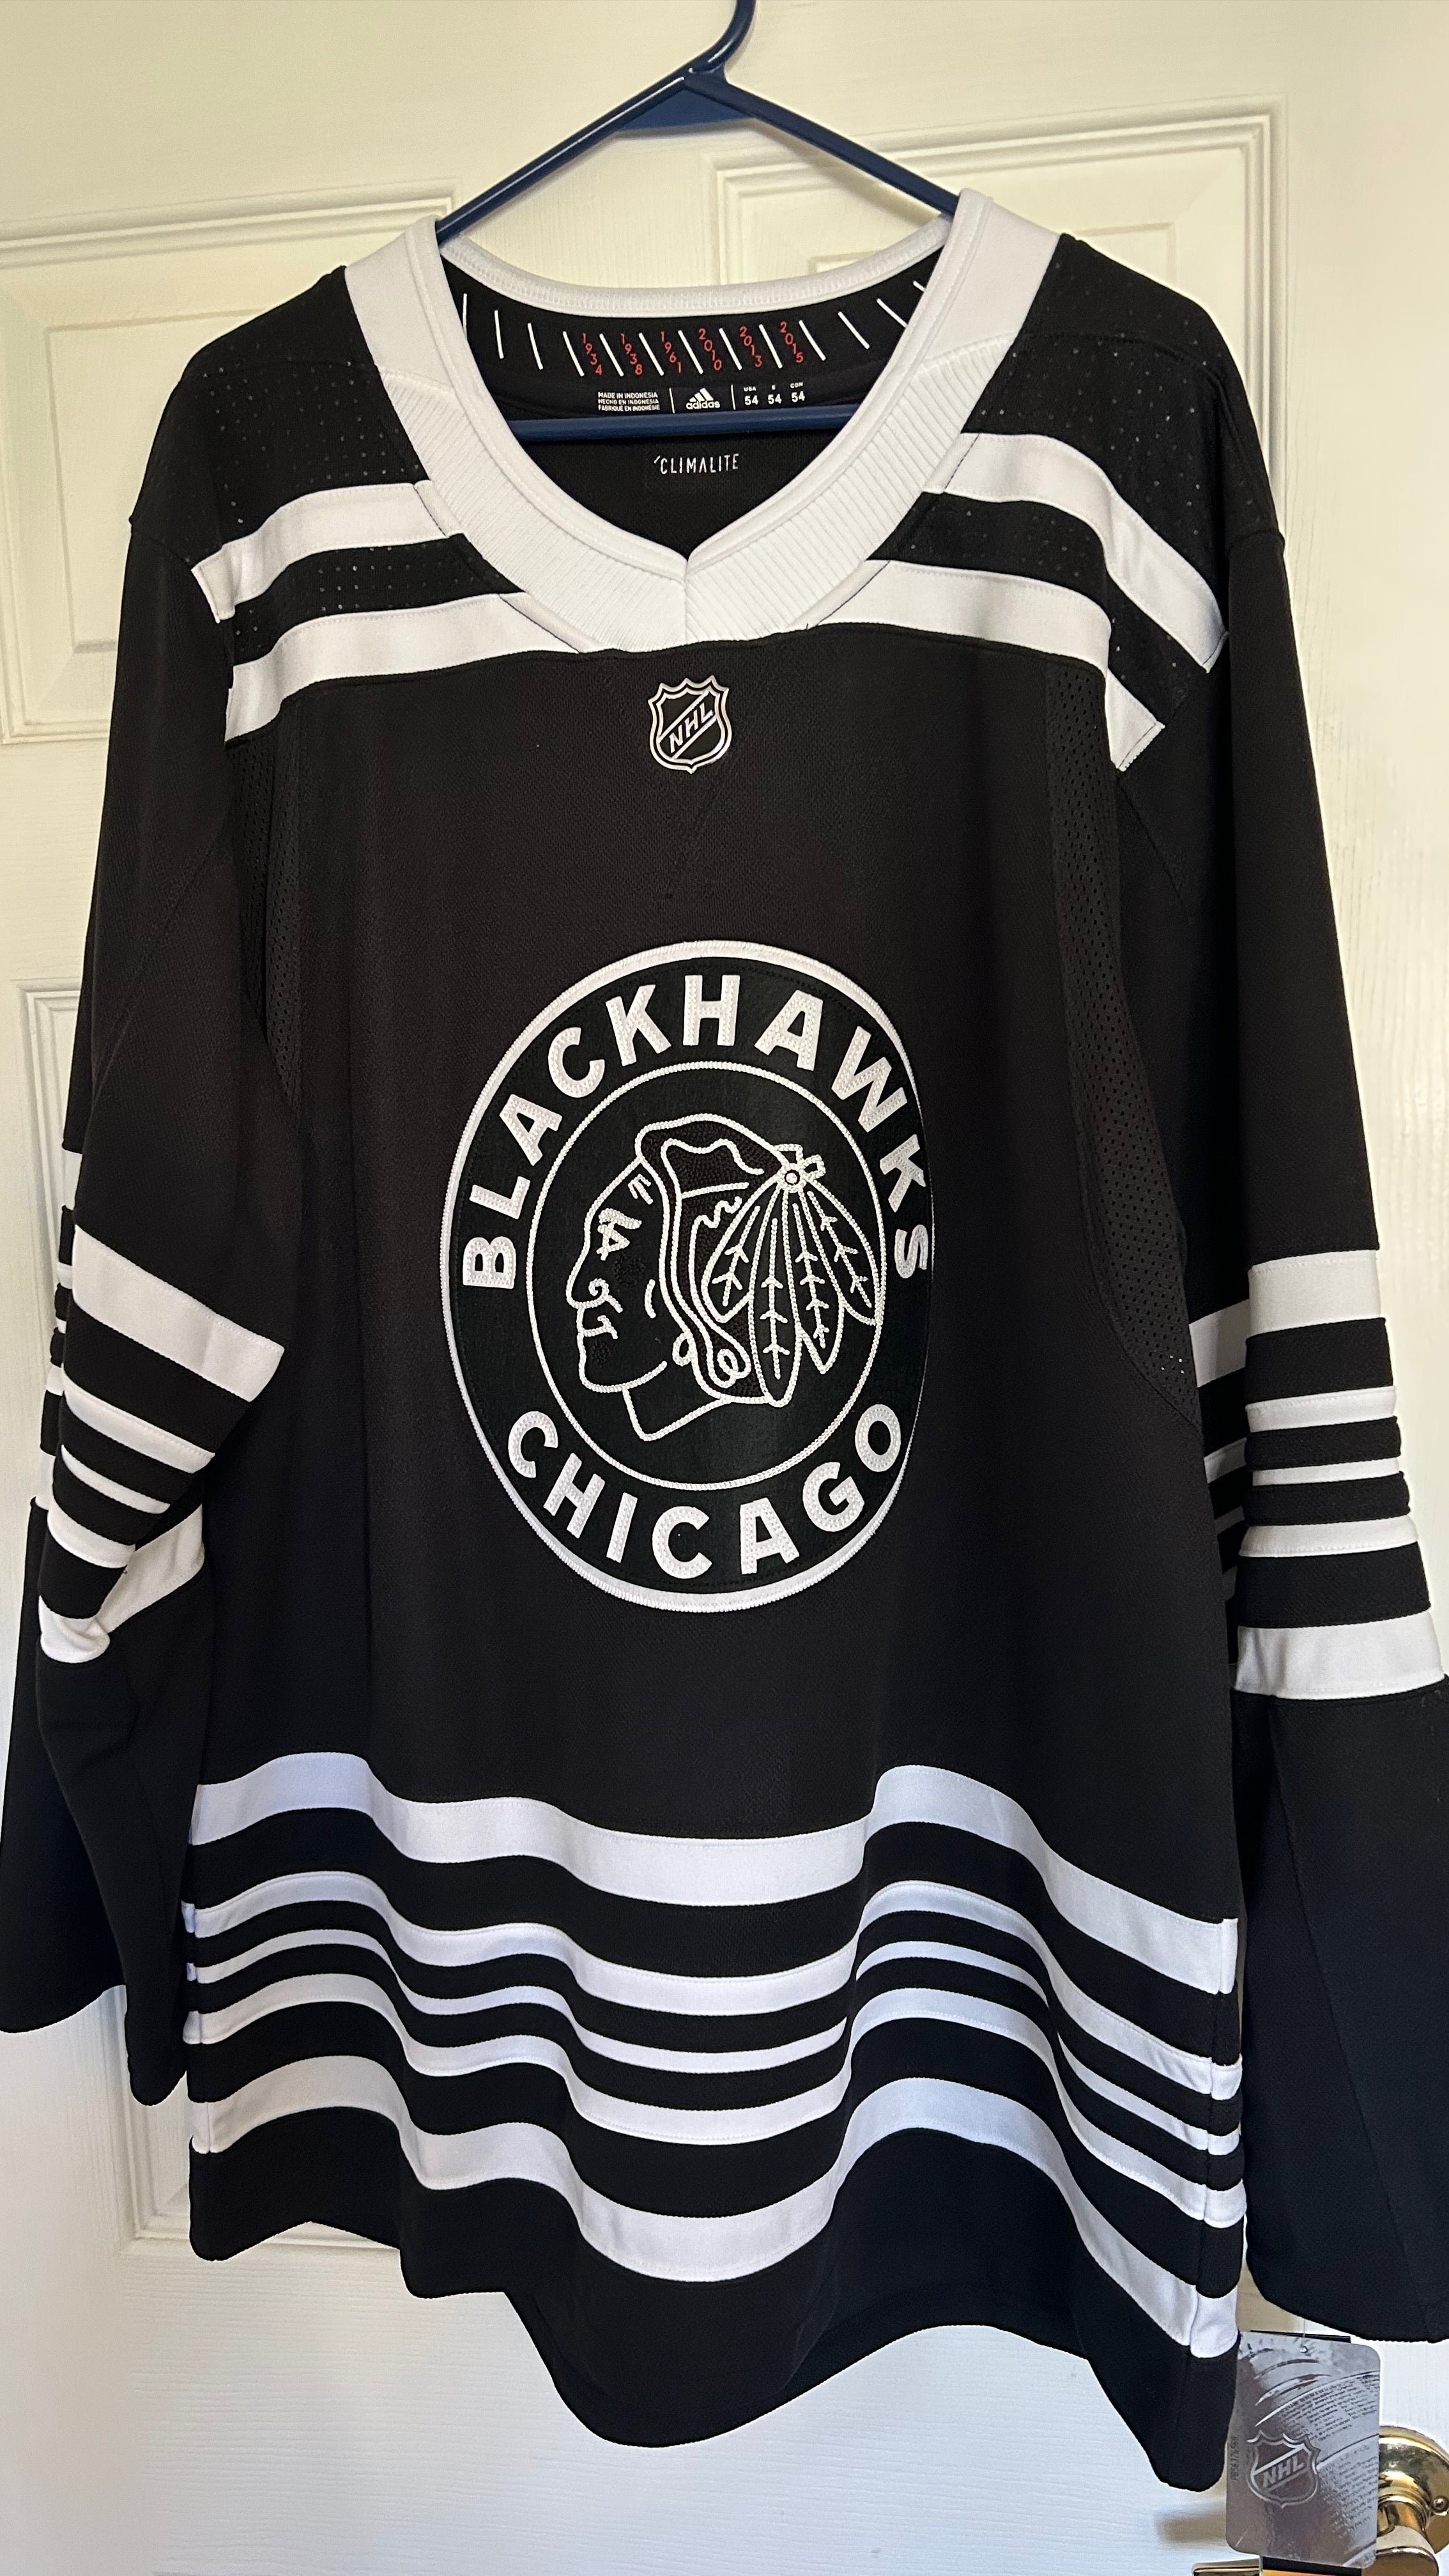  Chicago Blackhawks 2019/20 Alternate Authentic Jersey